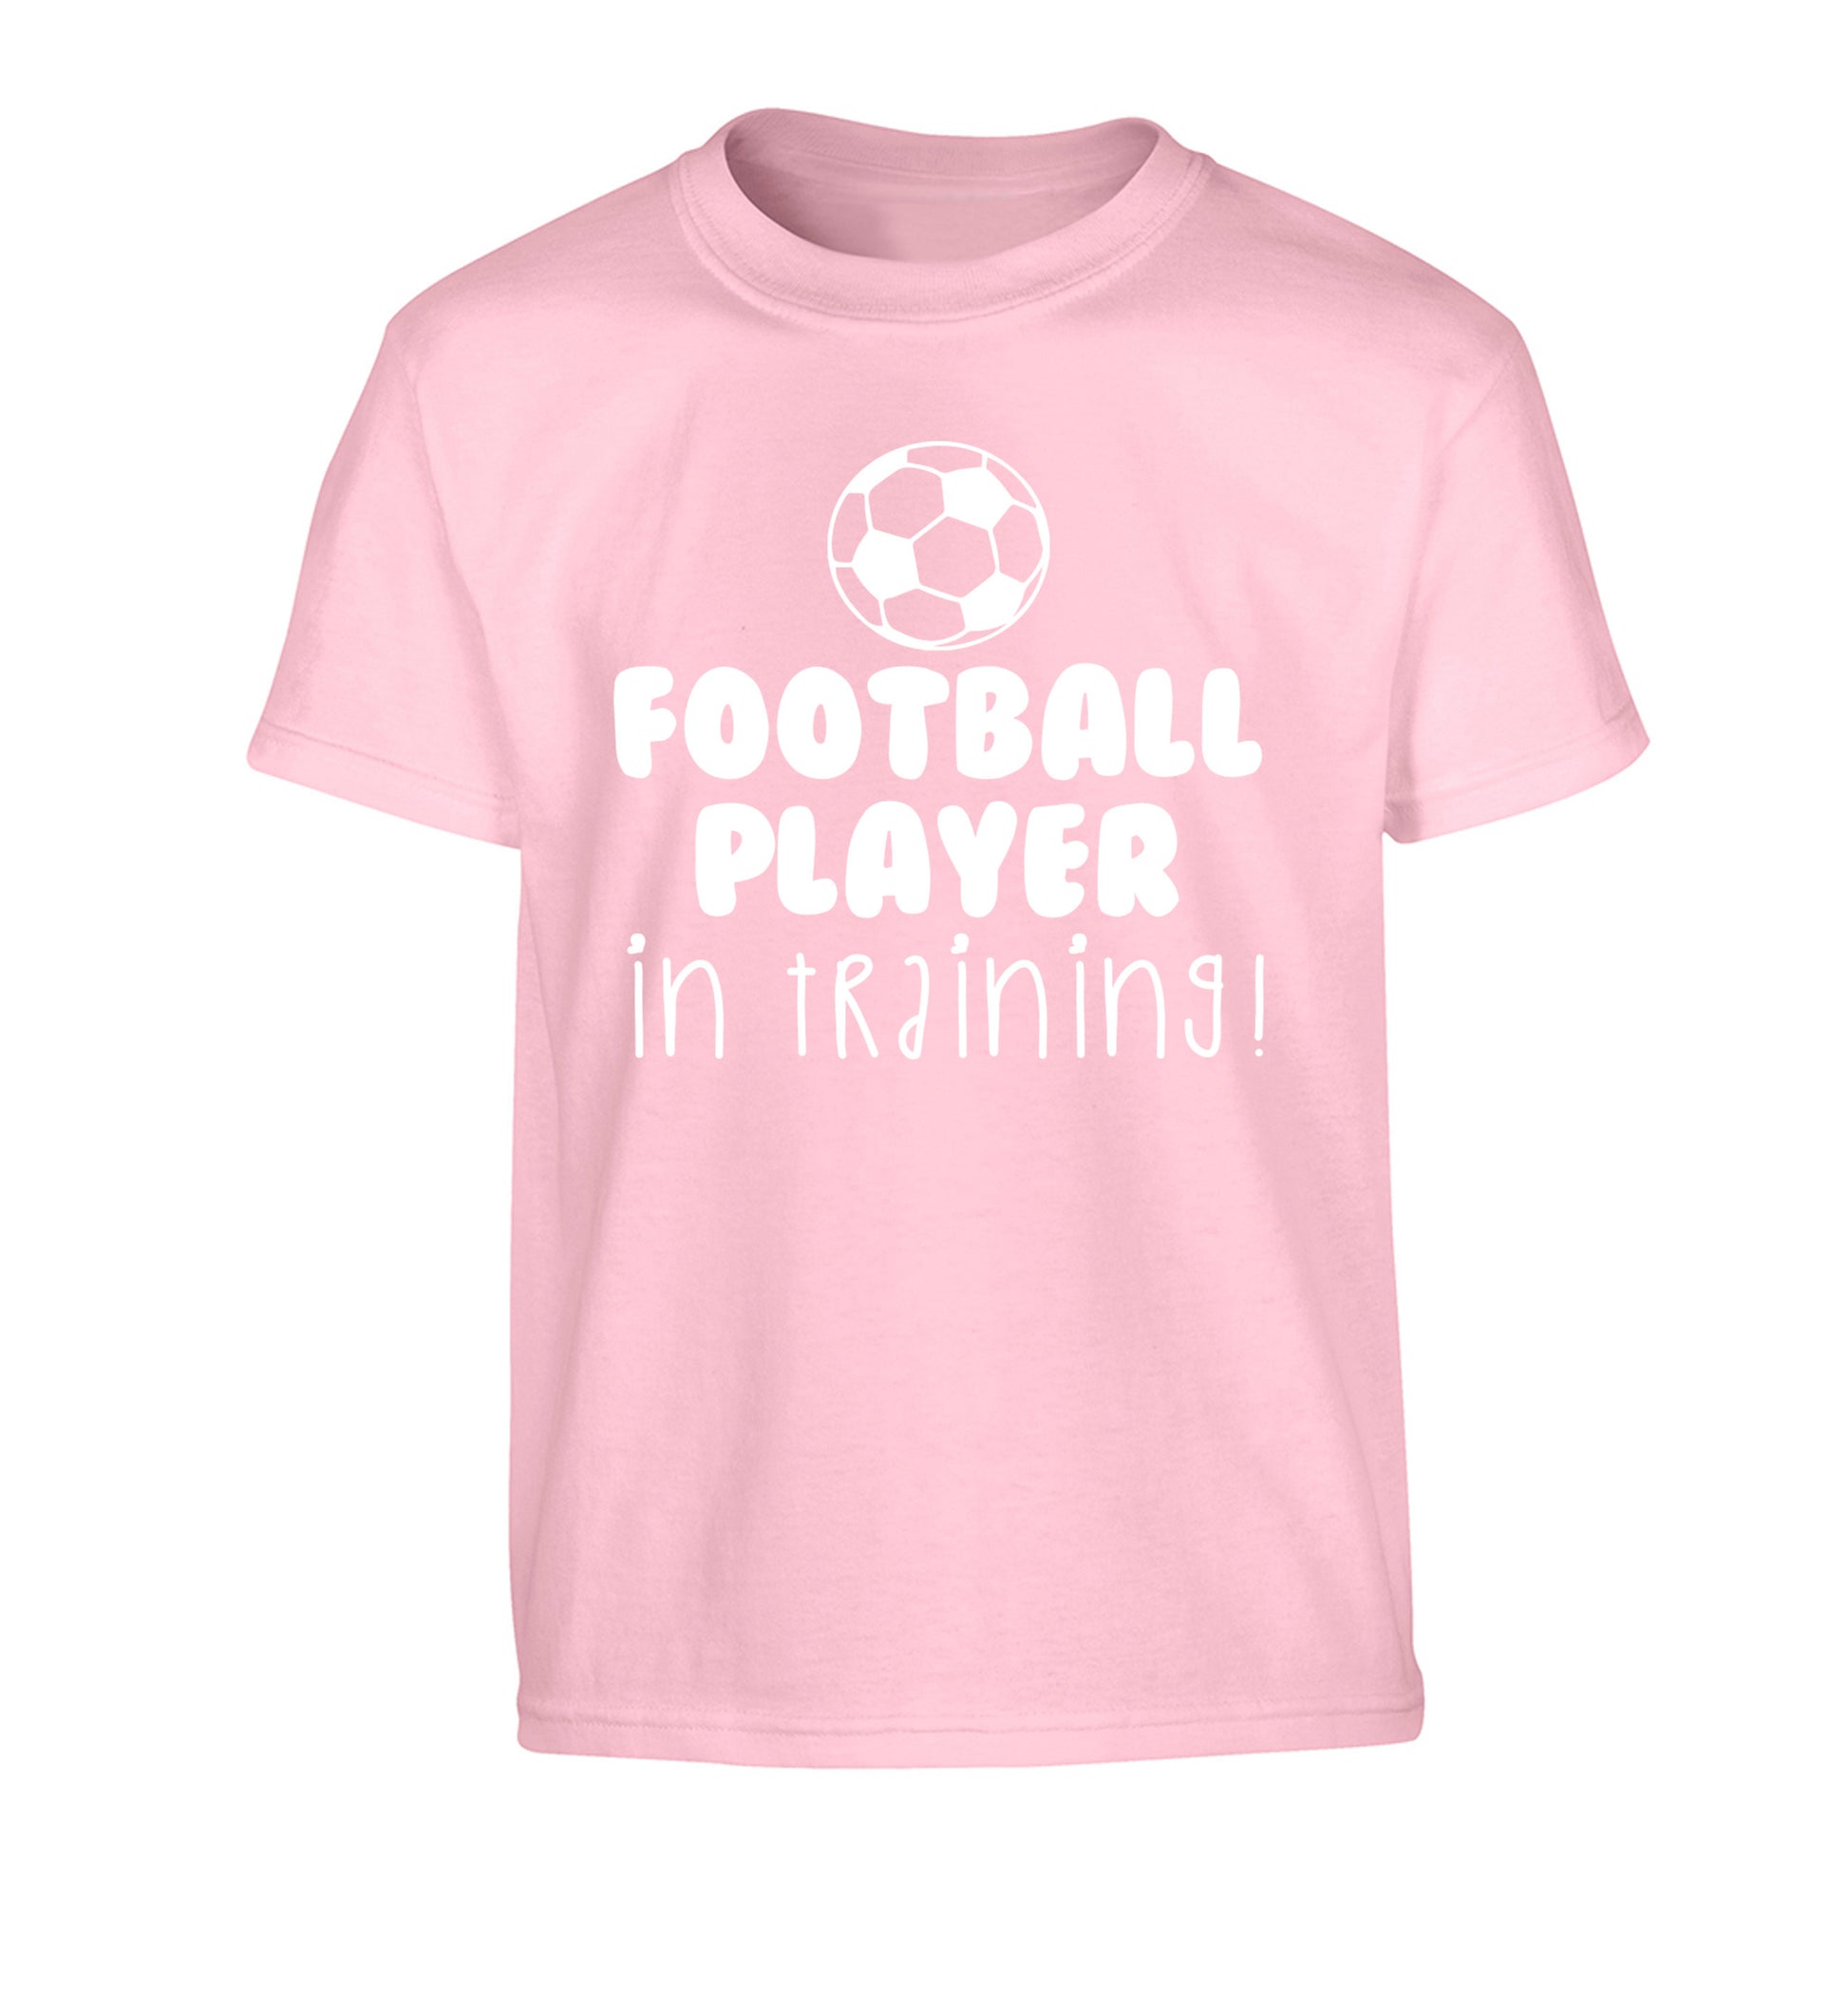 Football player in training Children's light pink Tshirt 12-14 Years